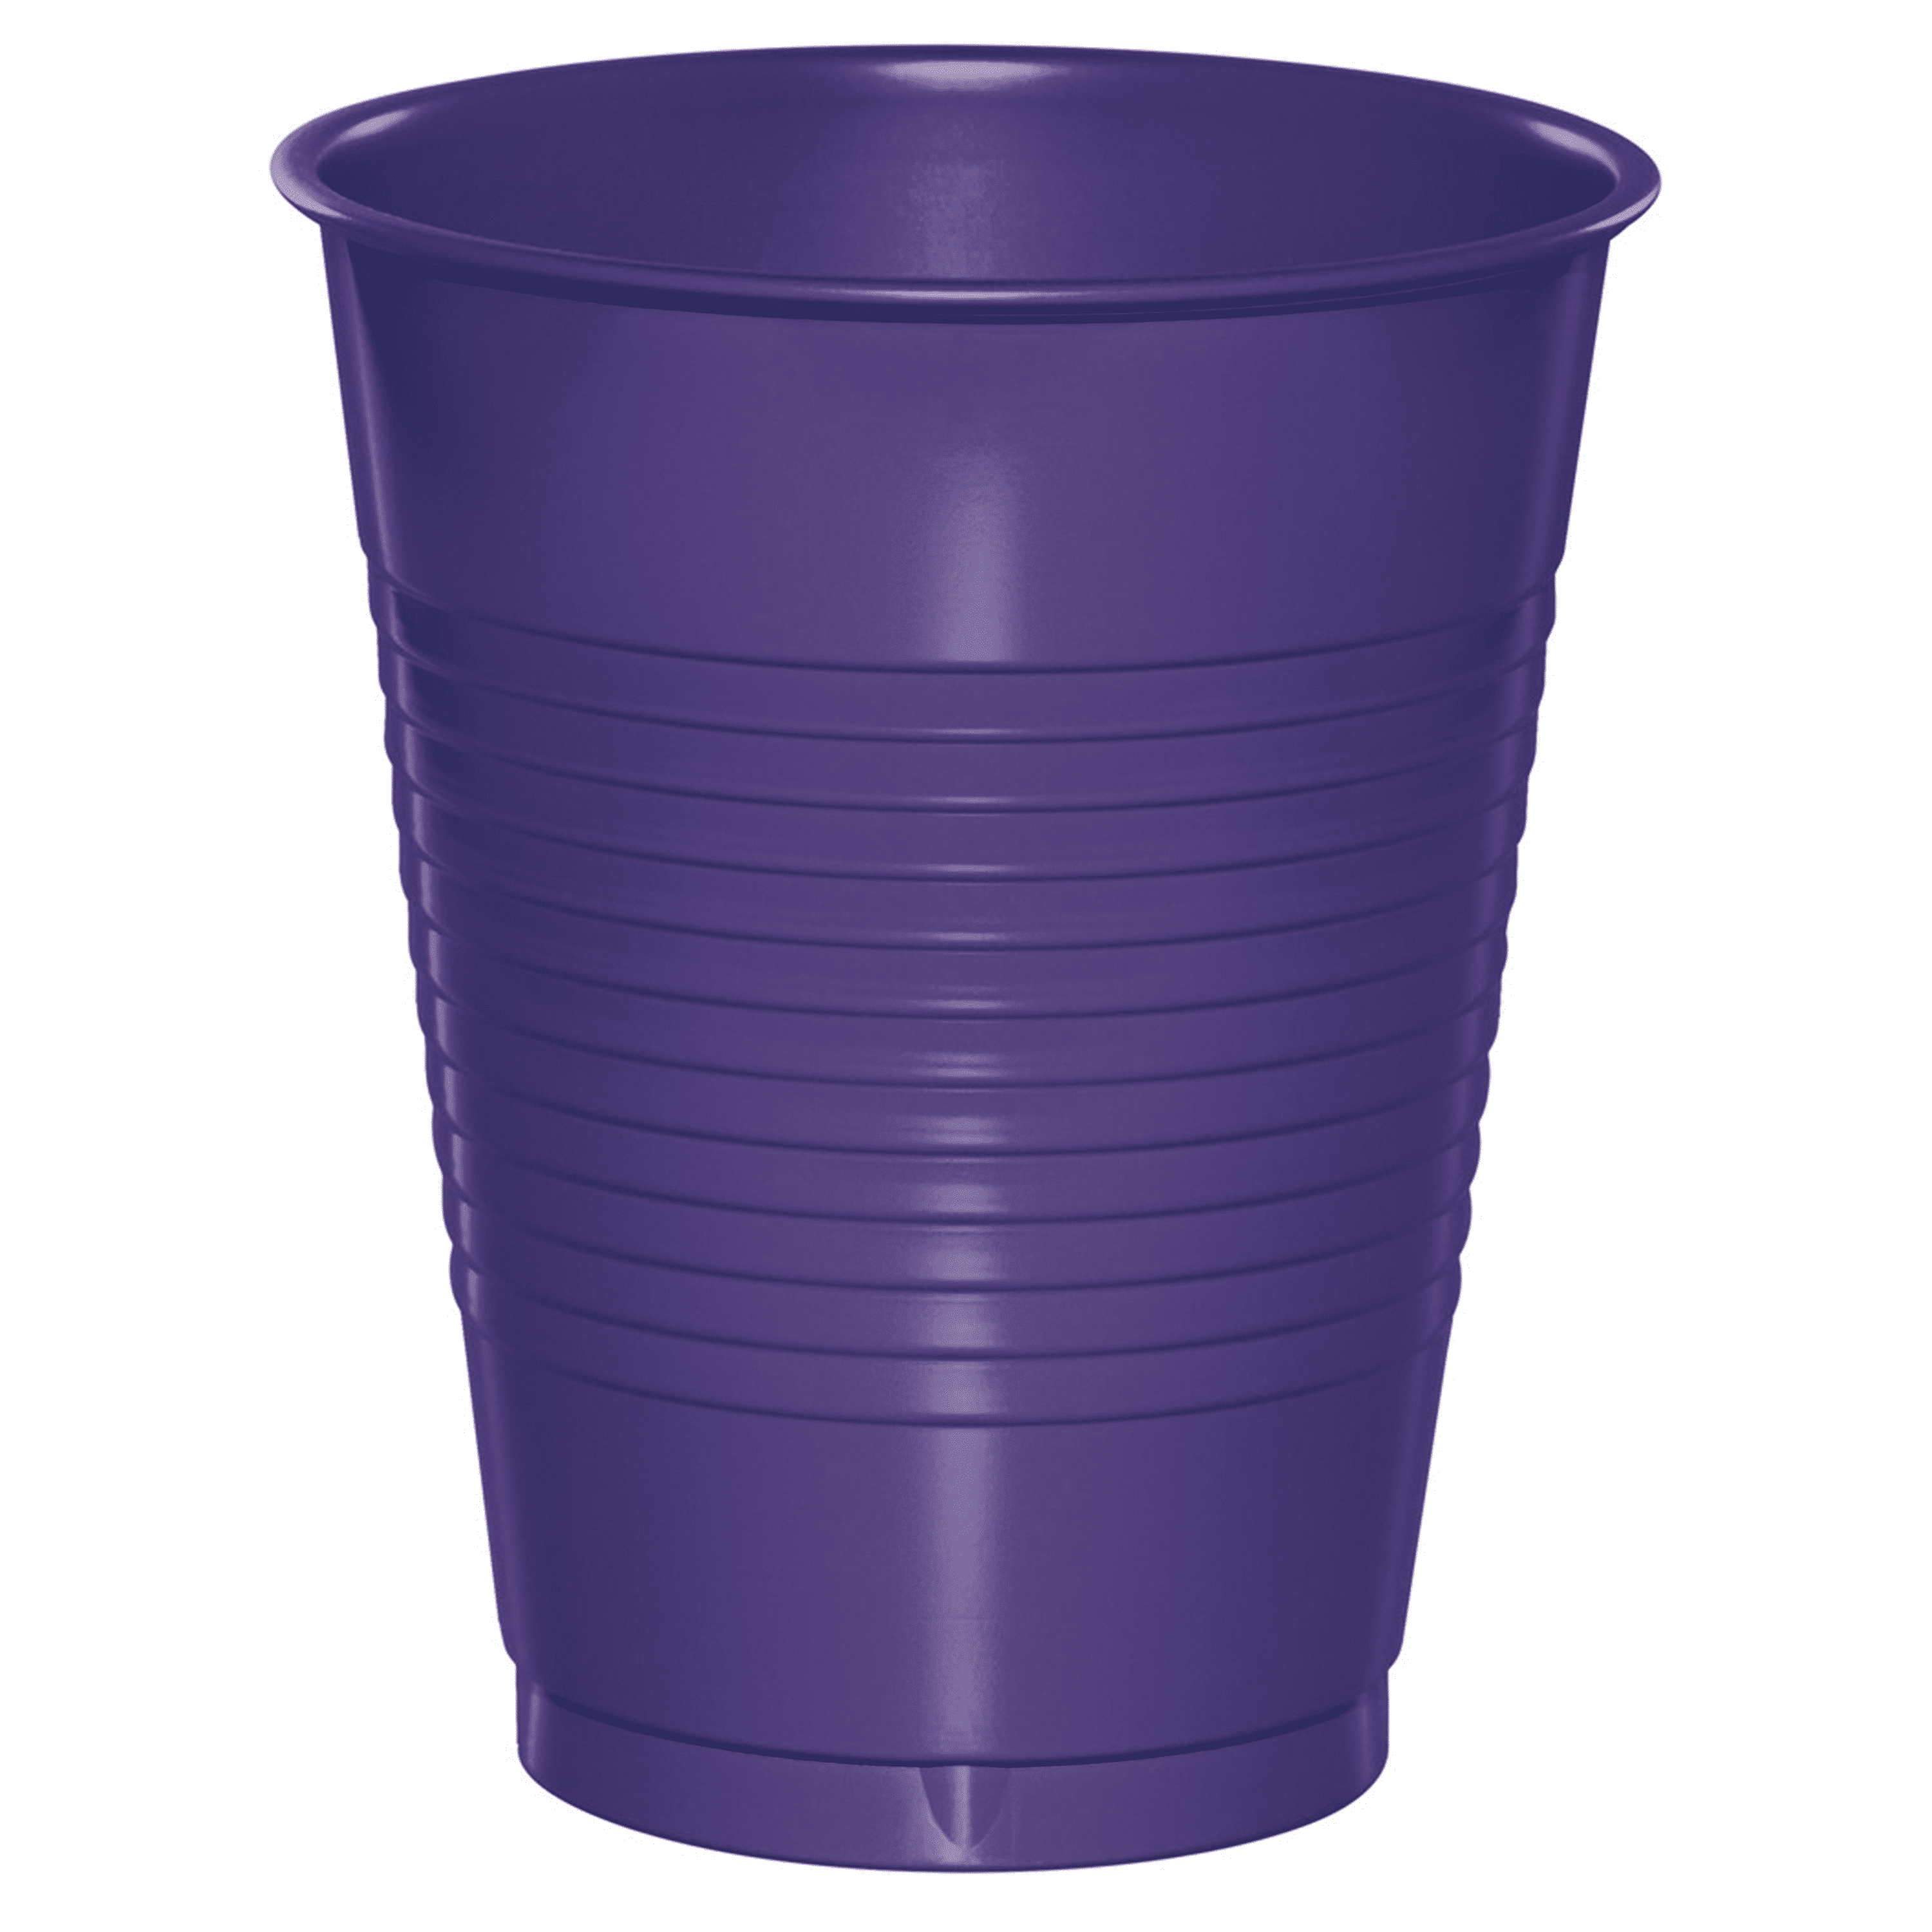 Cup 20. Alternative for Plastic Cups. Plastic Cup. MACDONALDS Plastic Cup Top.